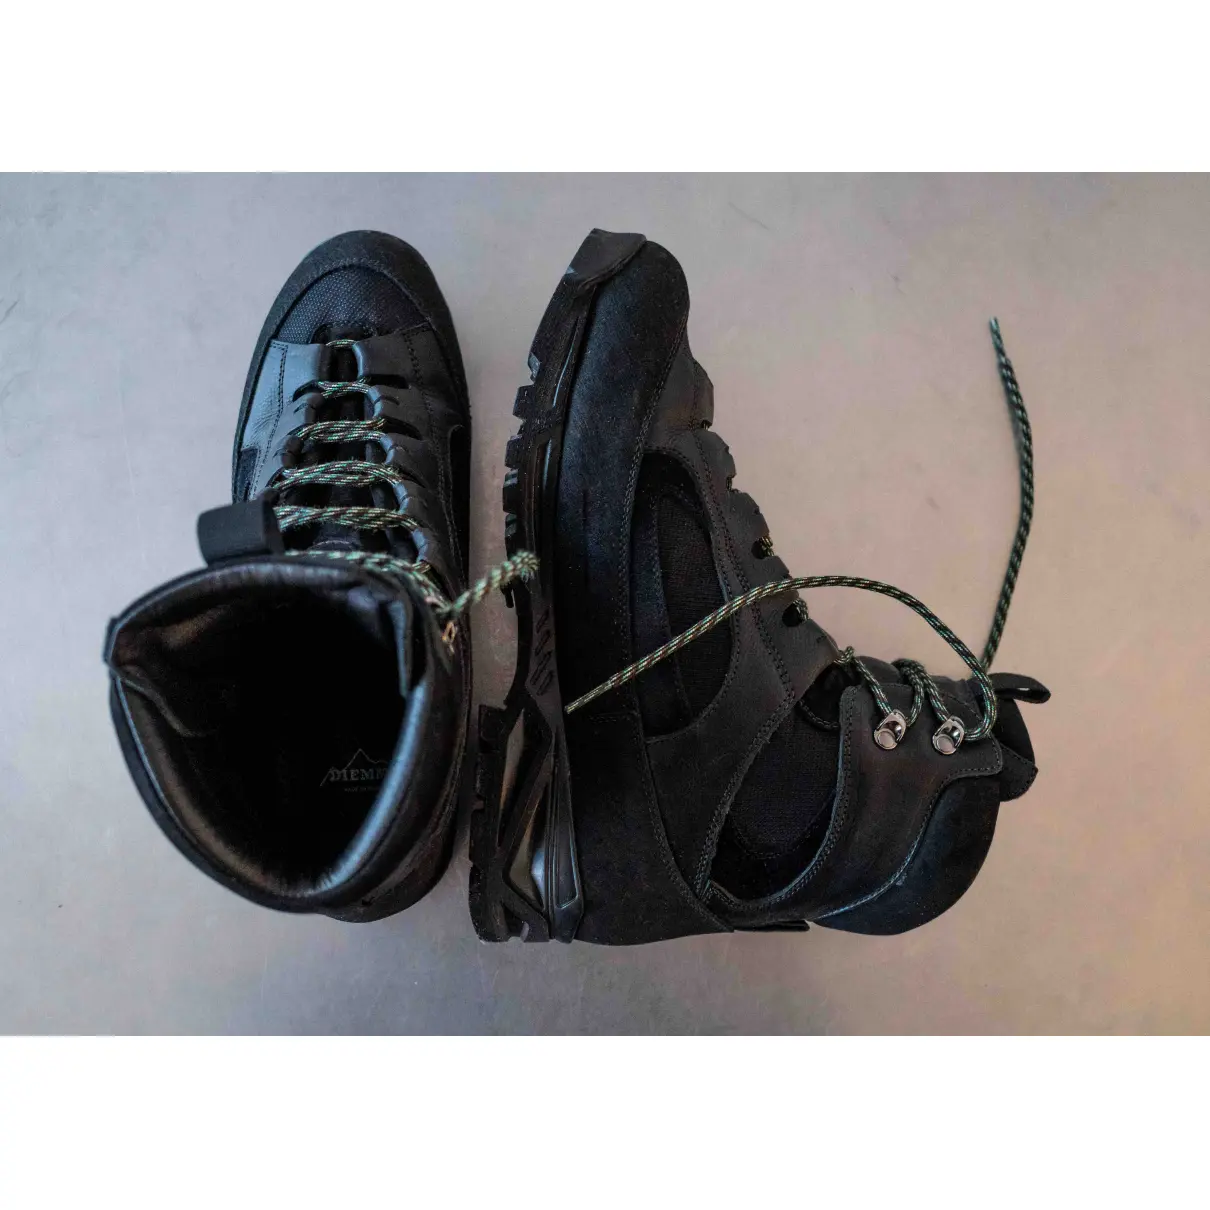 Buy Diemme Black Suede Boots online